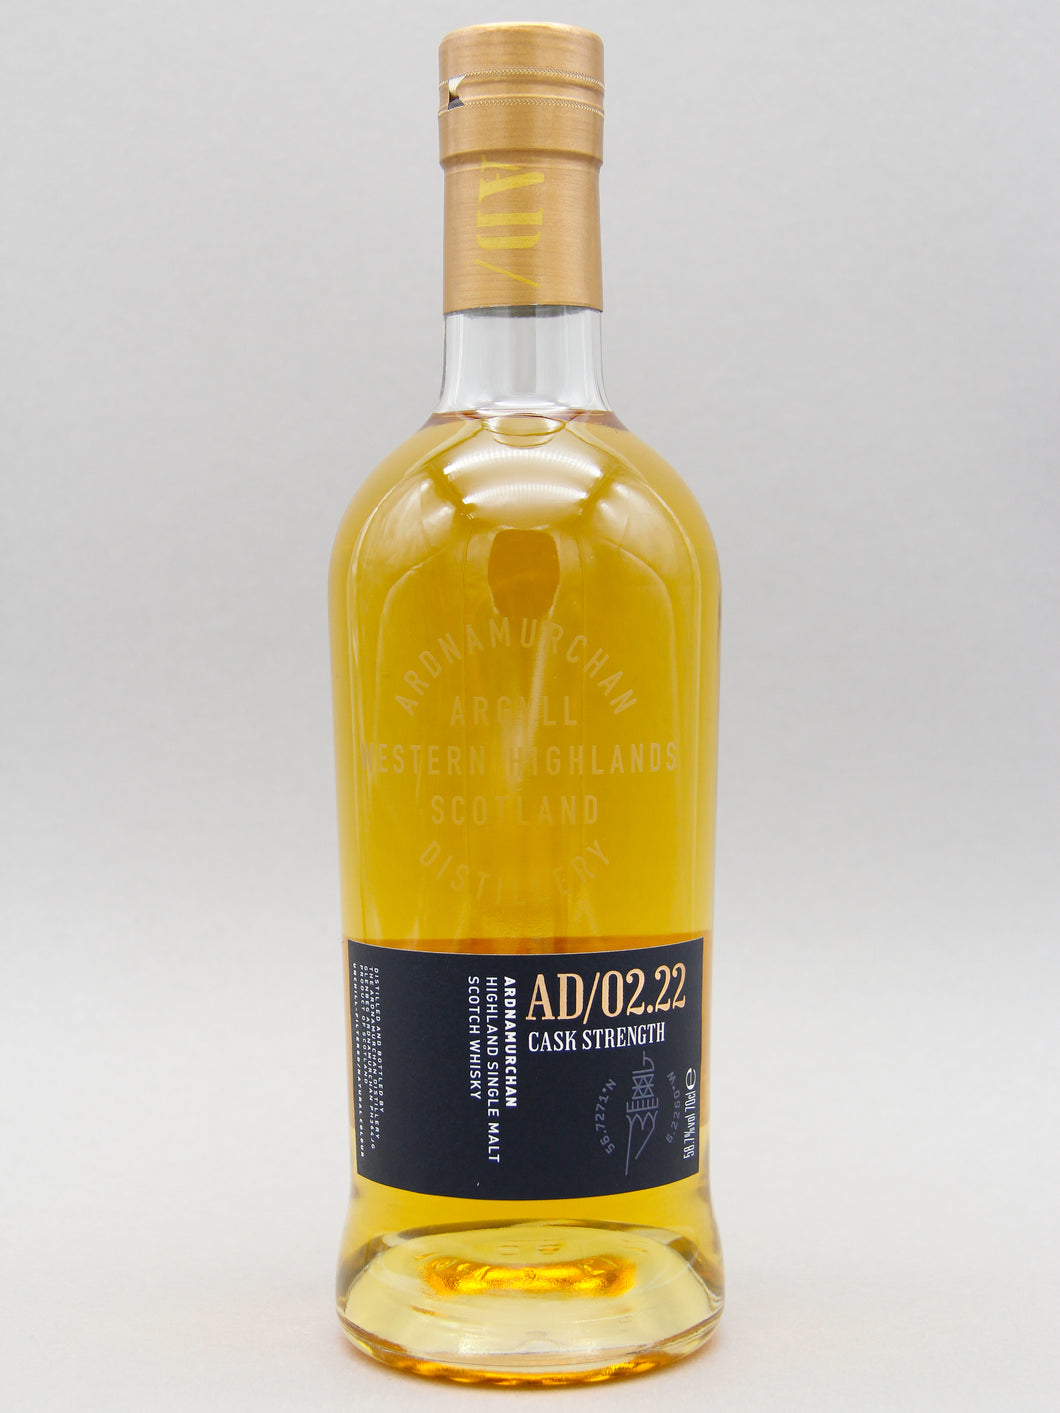 Ardnamurchan AD/02.22, Cask strength, Western Highland Single Malt Scotch Whisky (58.7%, 70cl)